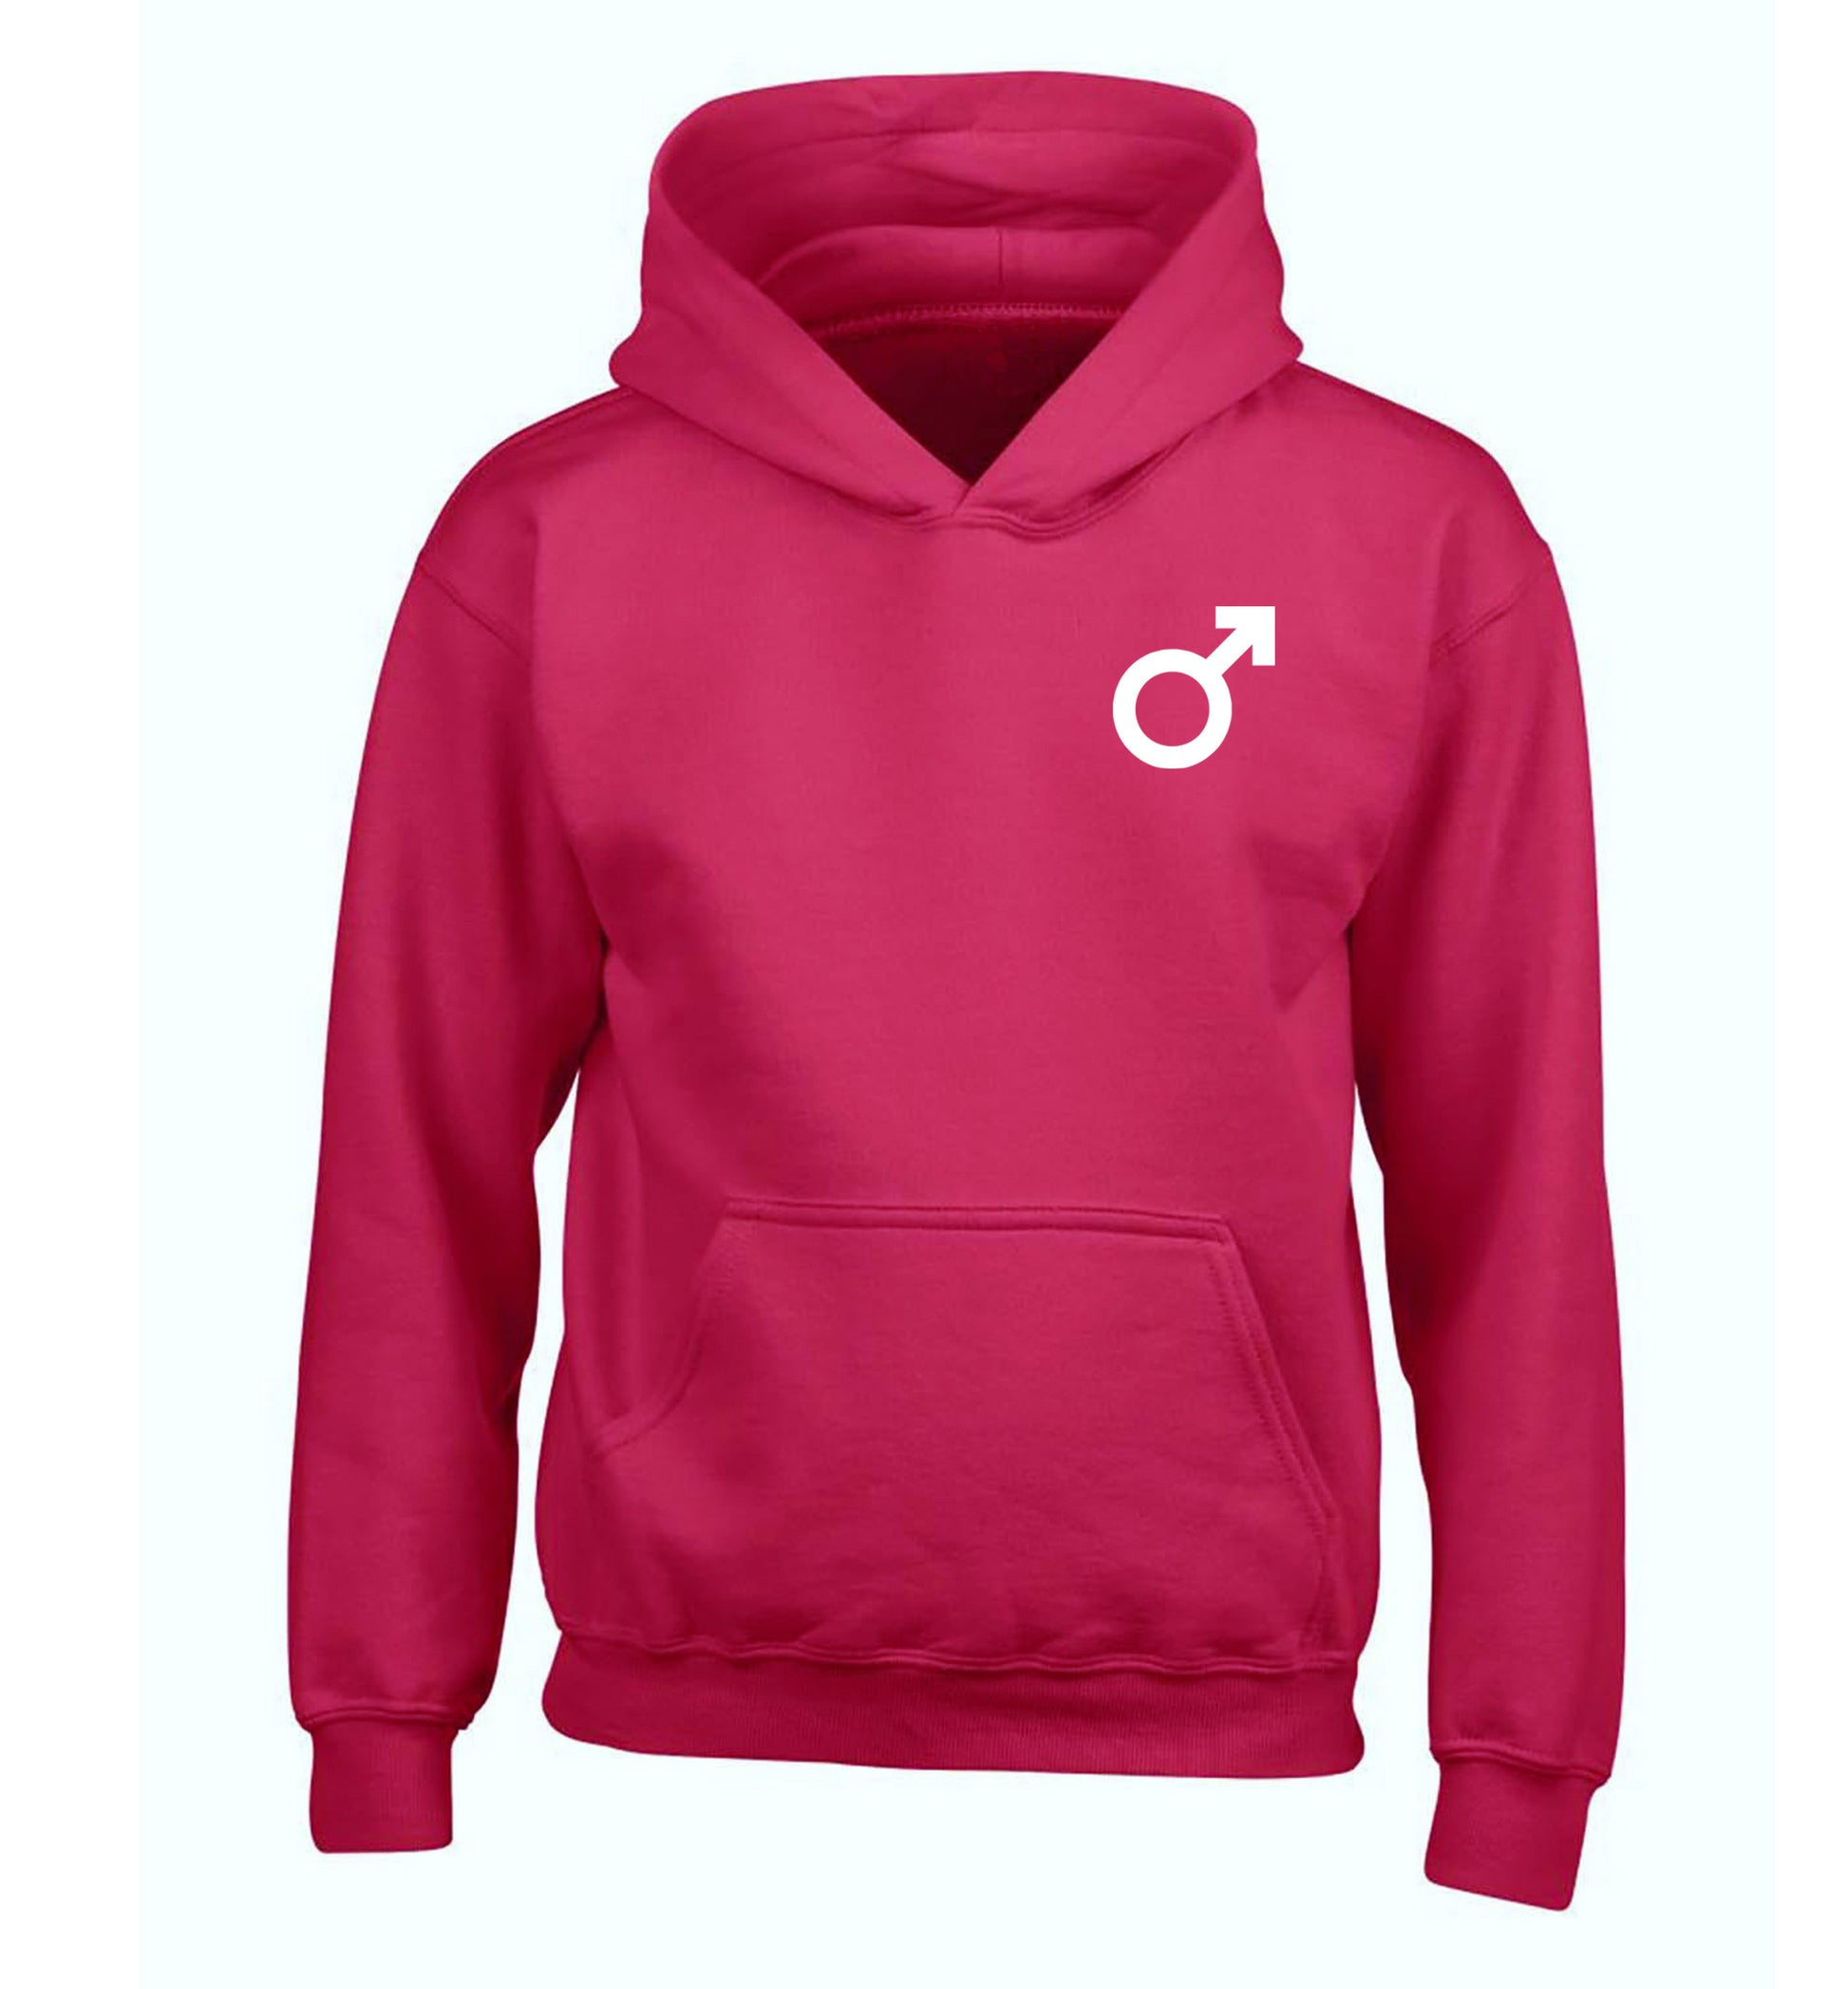 Male symbol pocket children's pink hoodie 12-14 Years